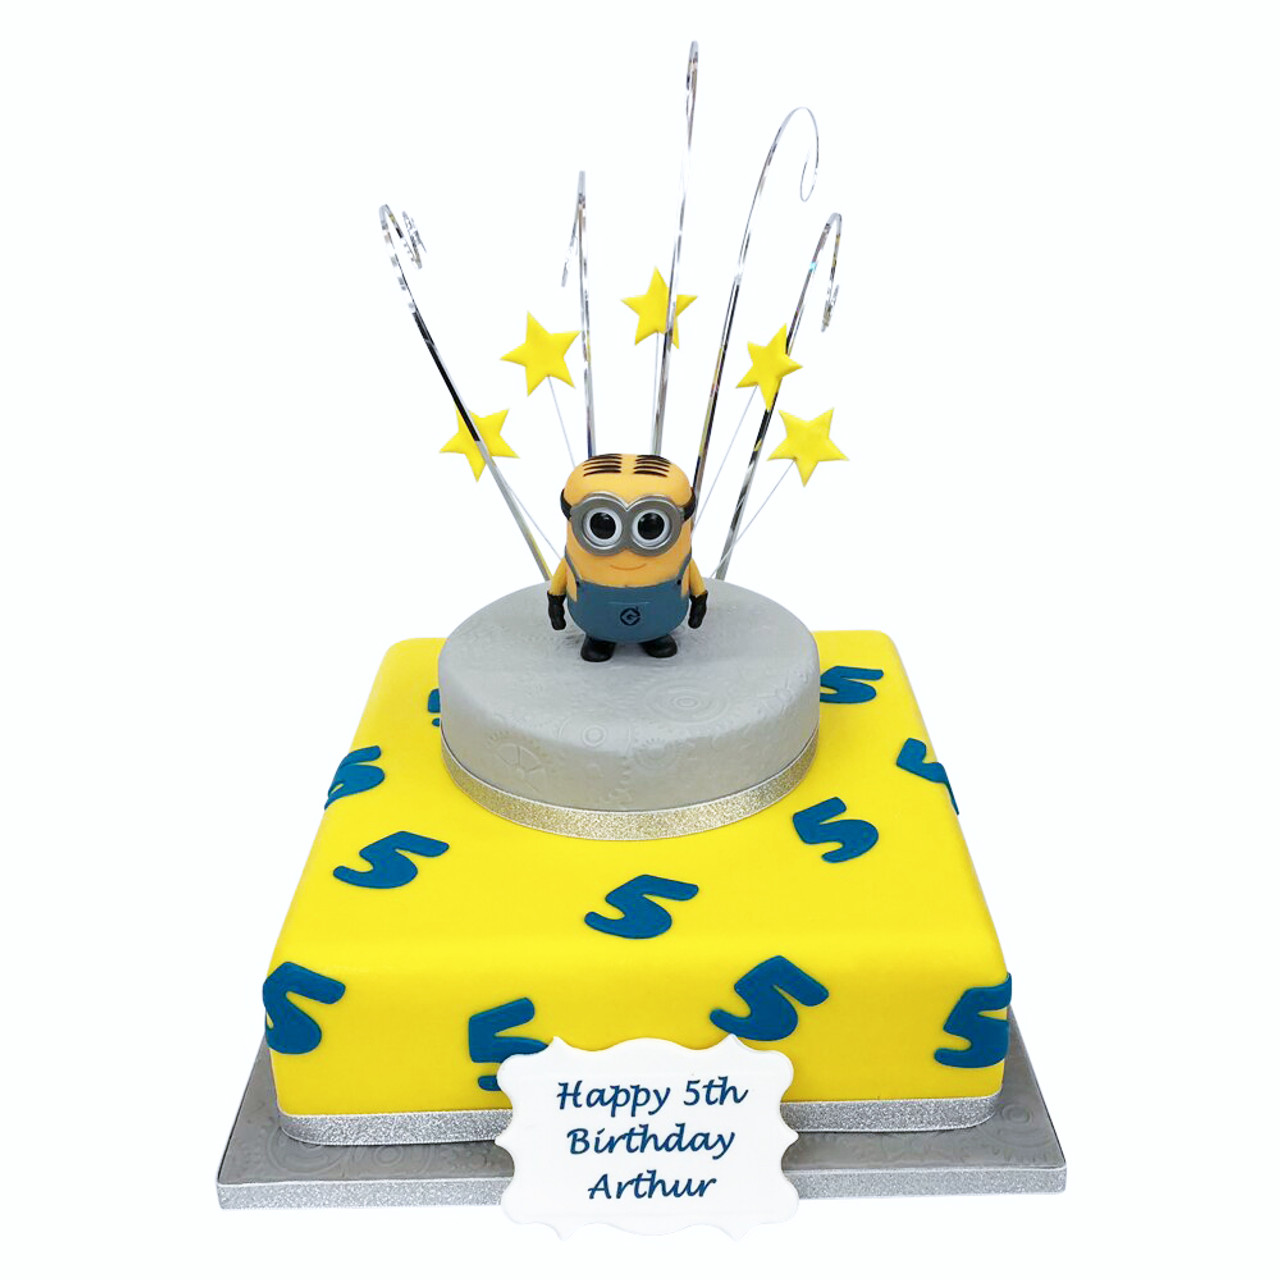 Order your minion birthday cake online